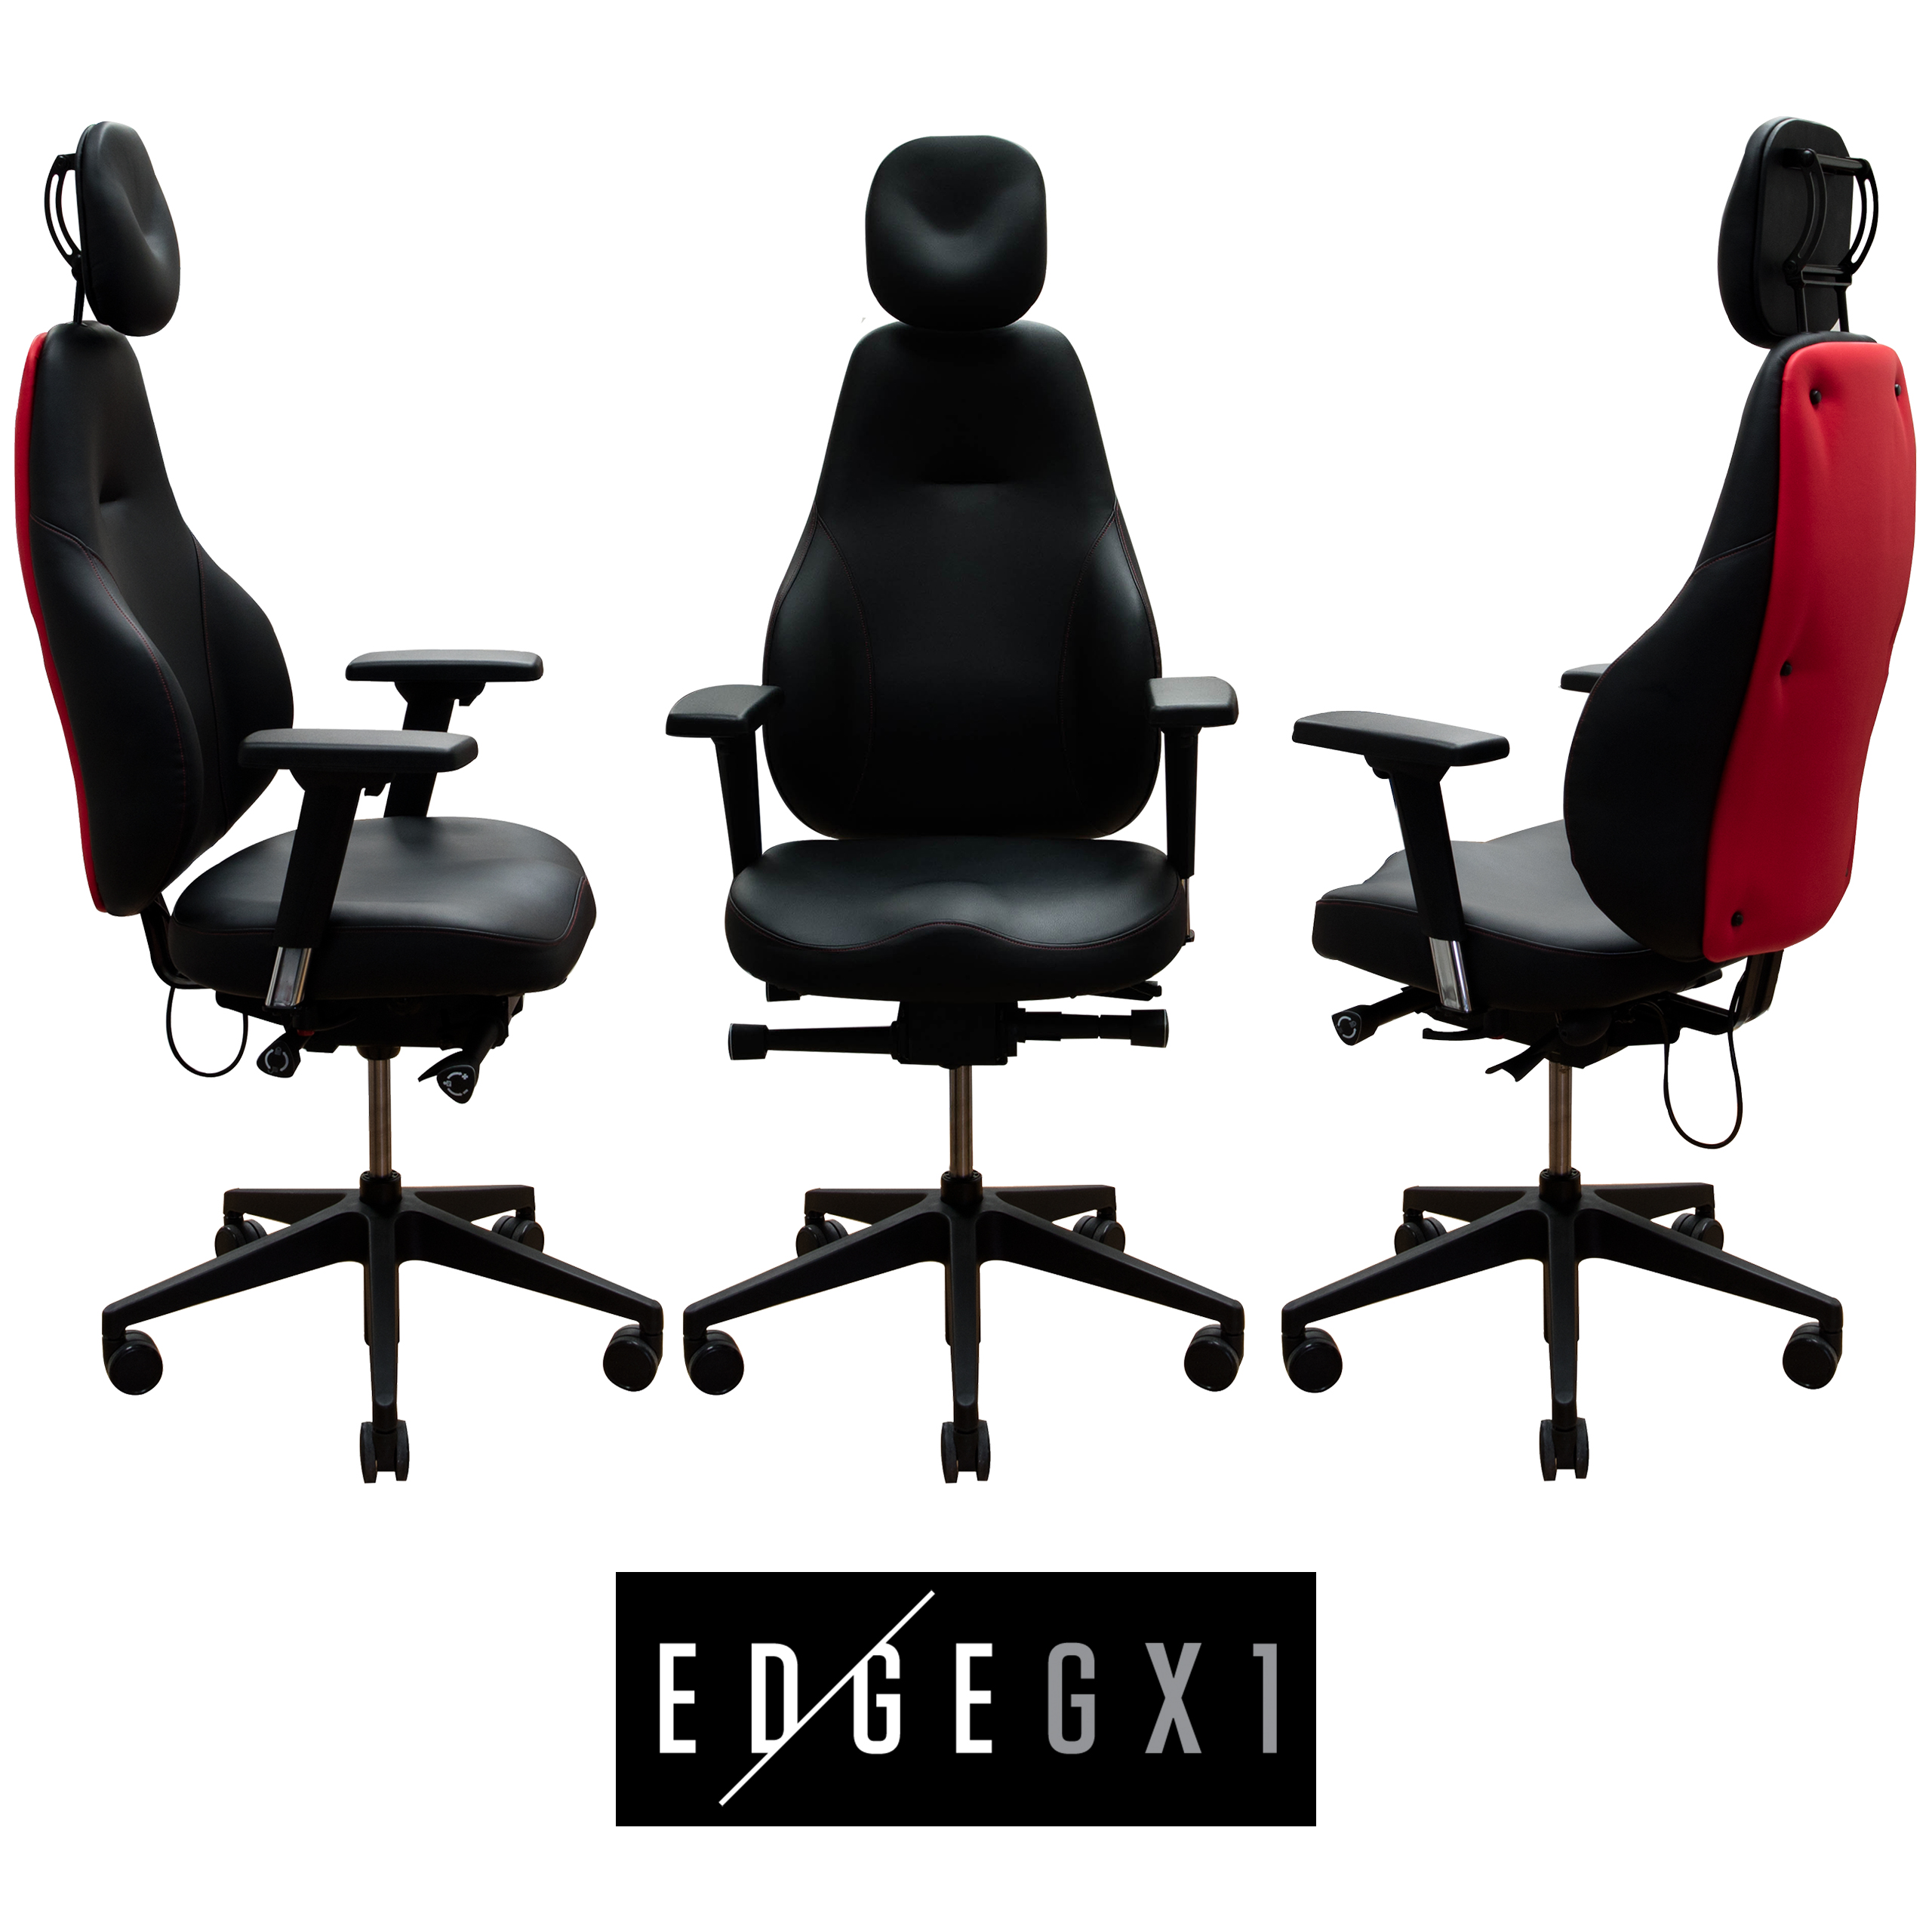 EDGE Unveils GX1 Gaming Chair Designed with True Ergonomics Expertise